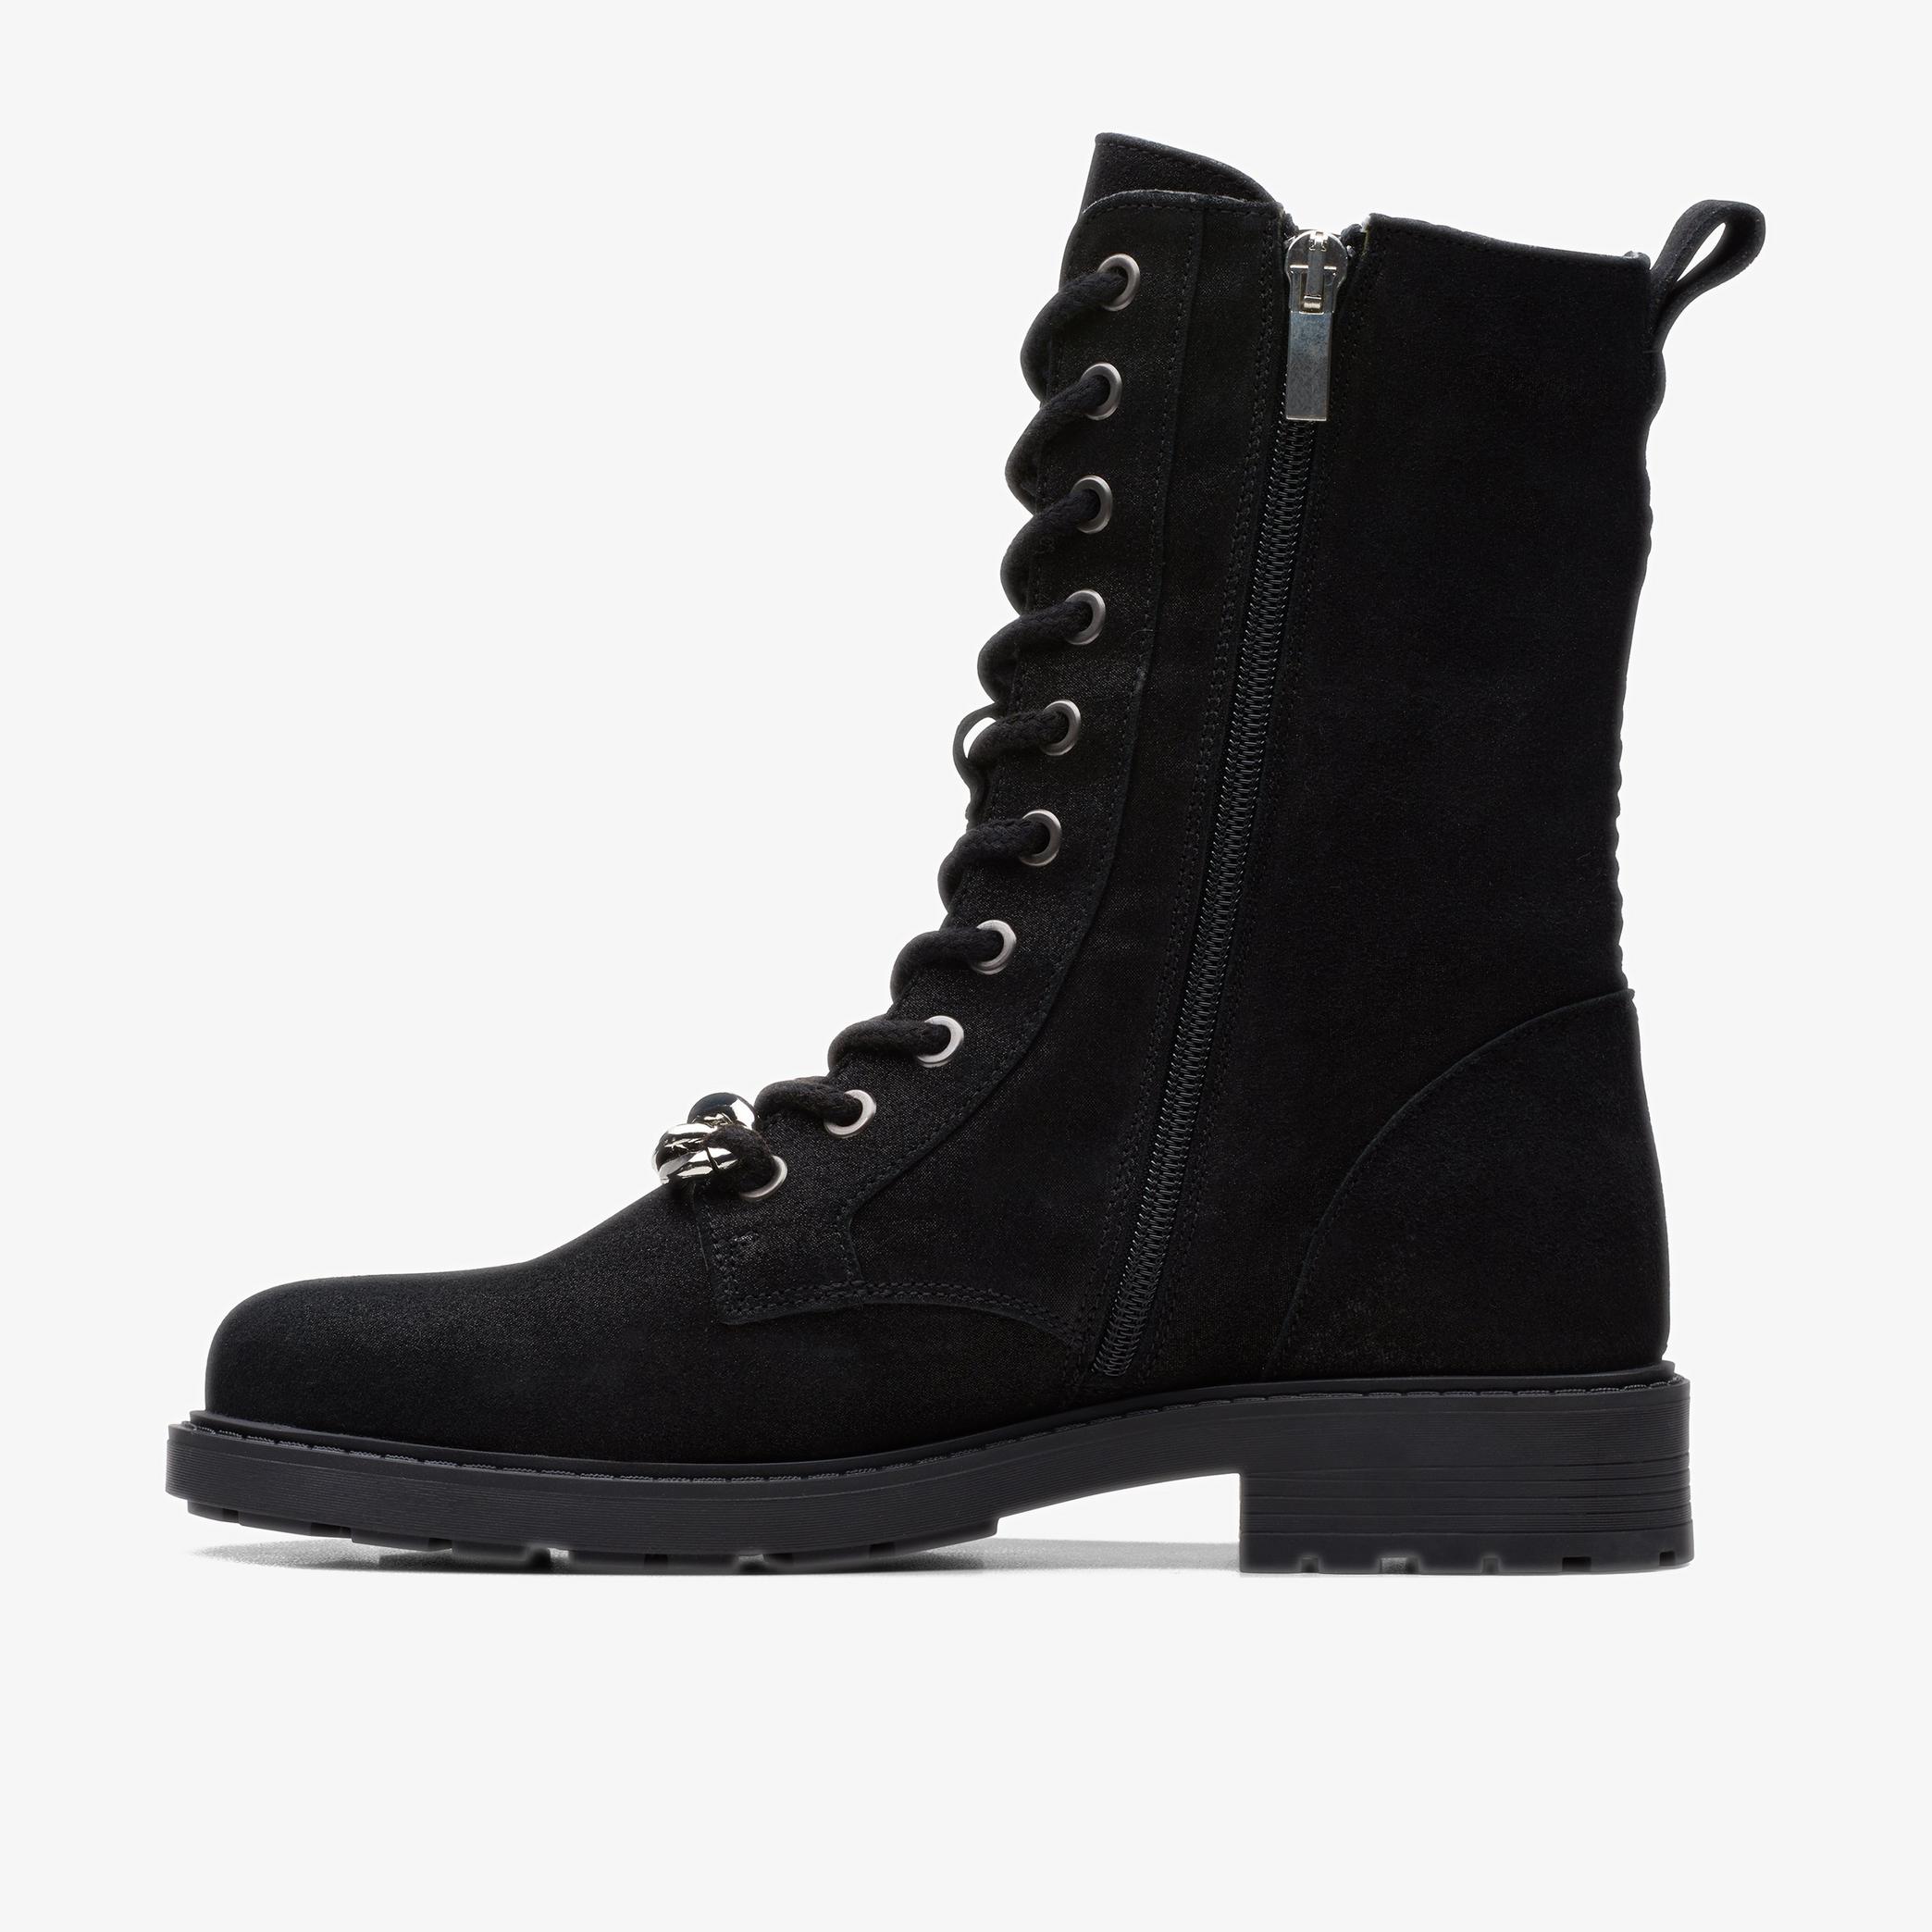 Orinoco2 Style Black Metallic Ankle Boots, view 2 of 6